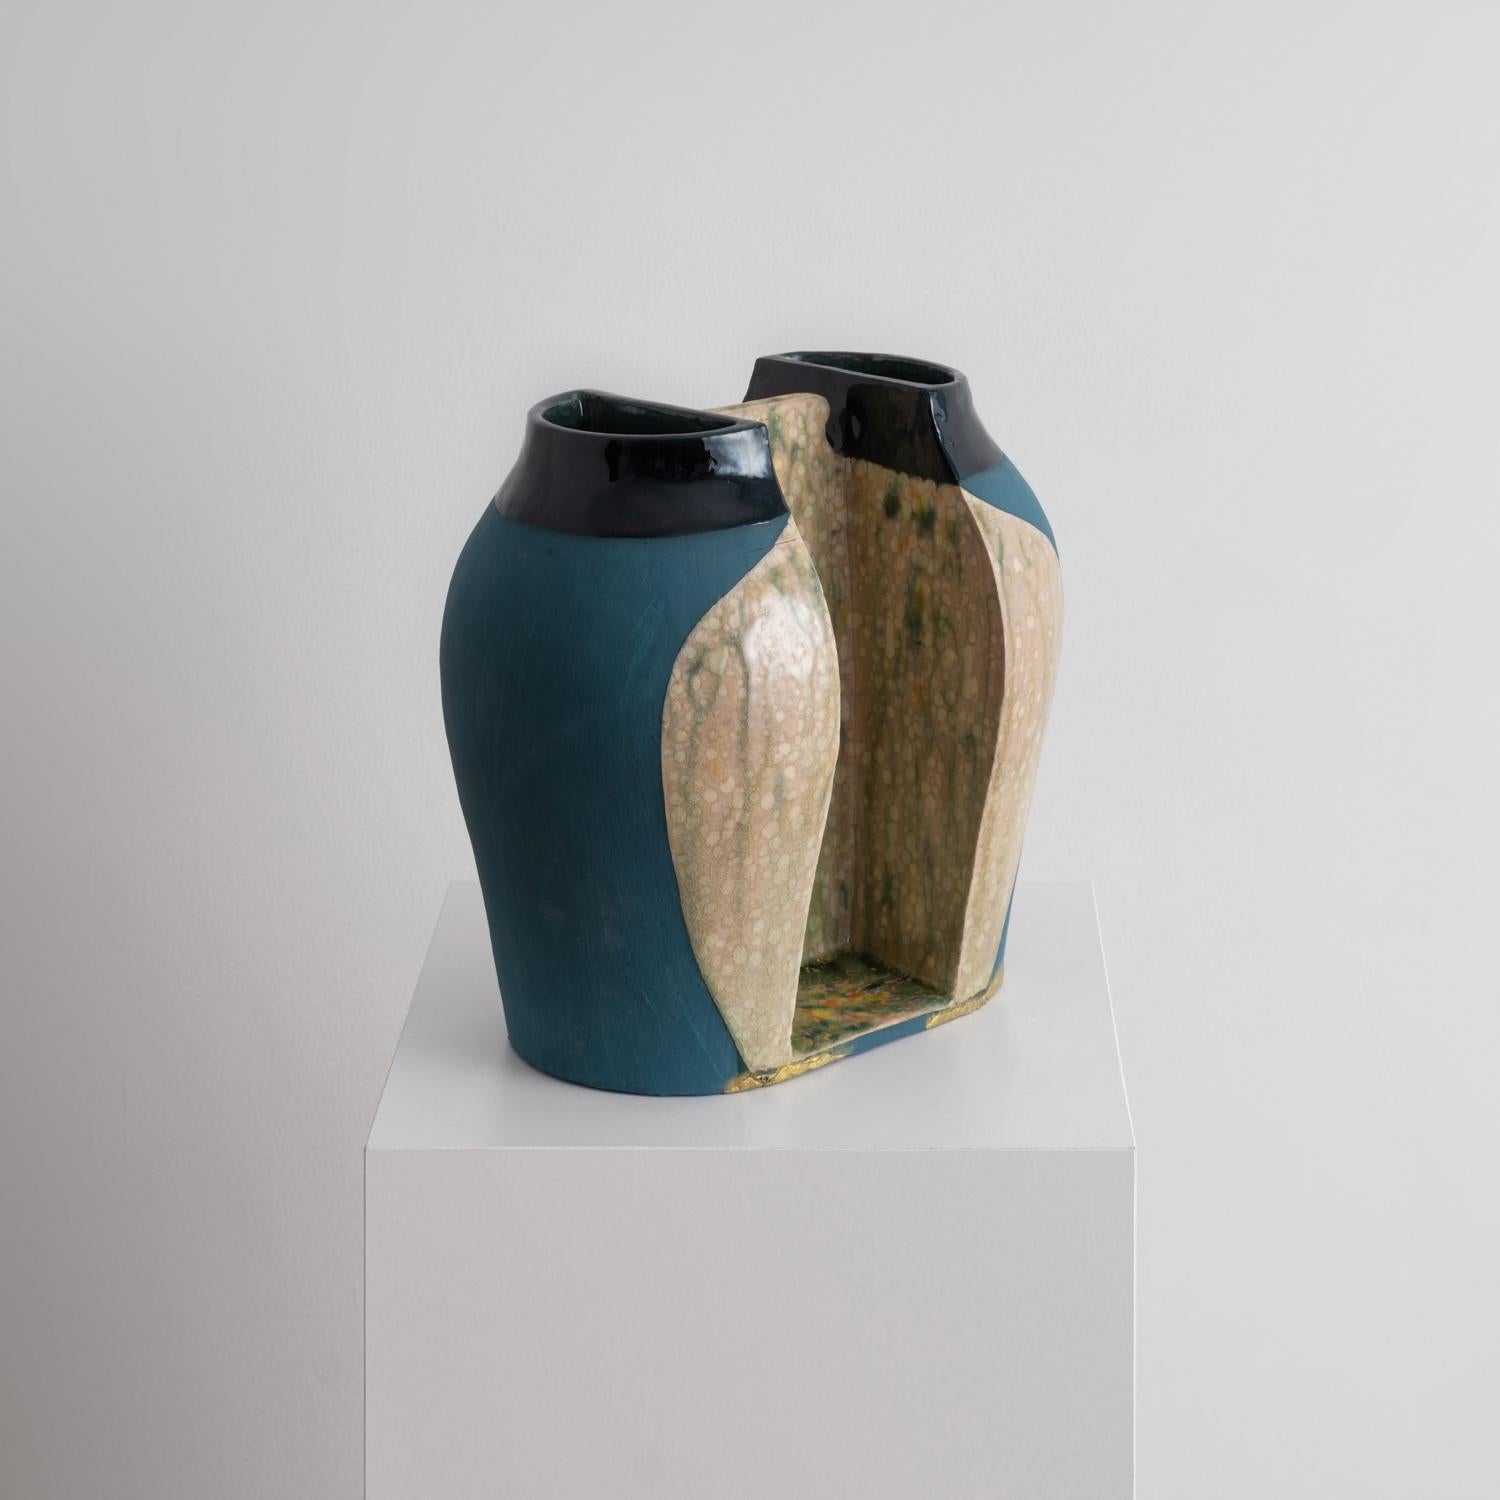 American Ceramic Glazed Stoneware & Kintsugi Vessel by Jenny Hata Blumenfield For Sale